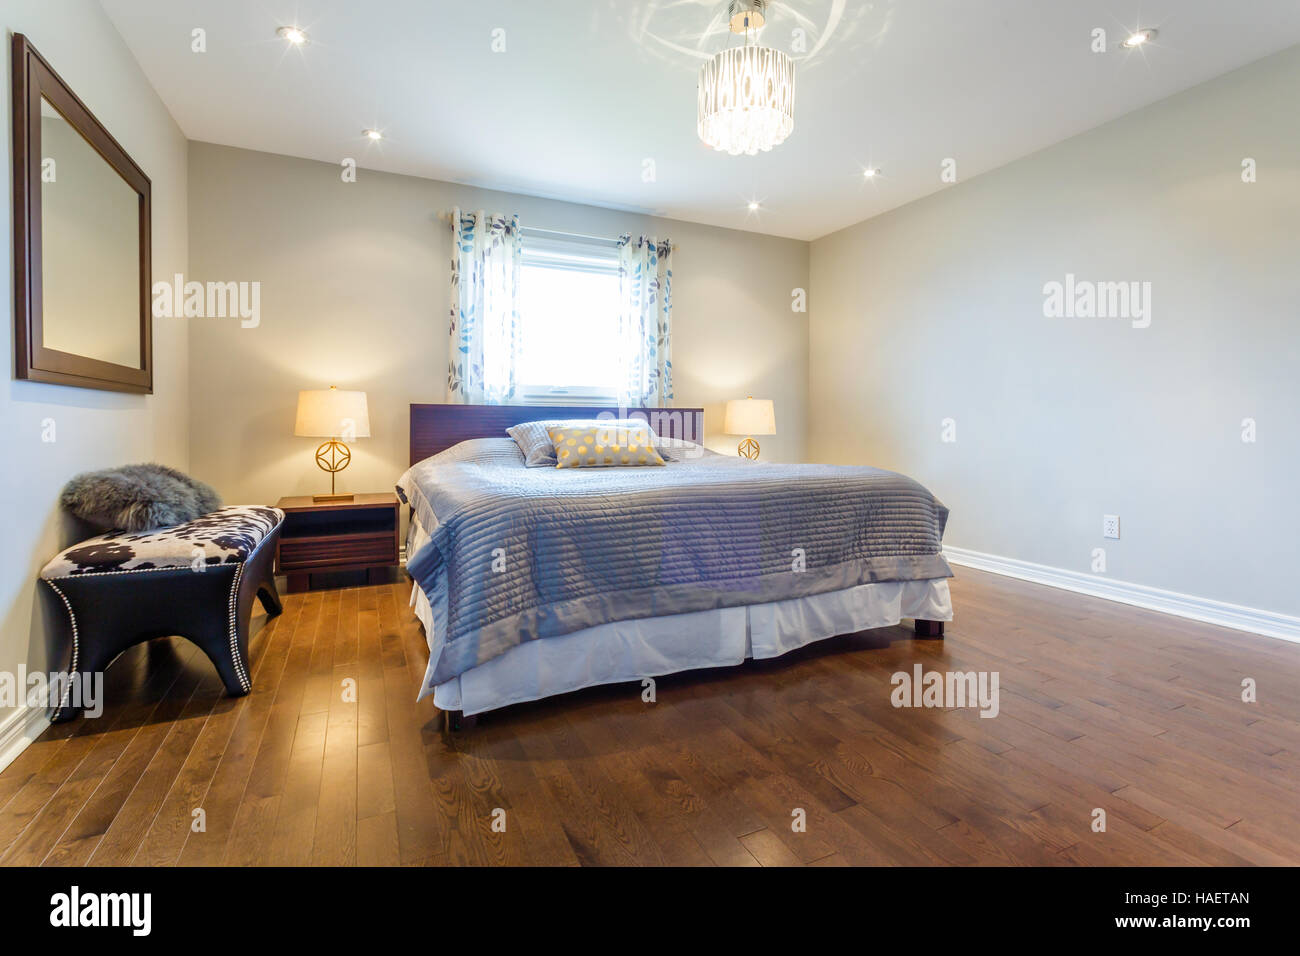 Bedroom Interior design Stock Photo